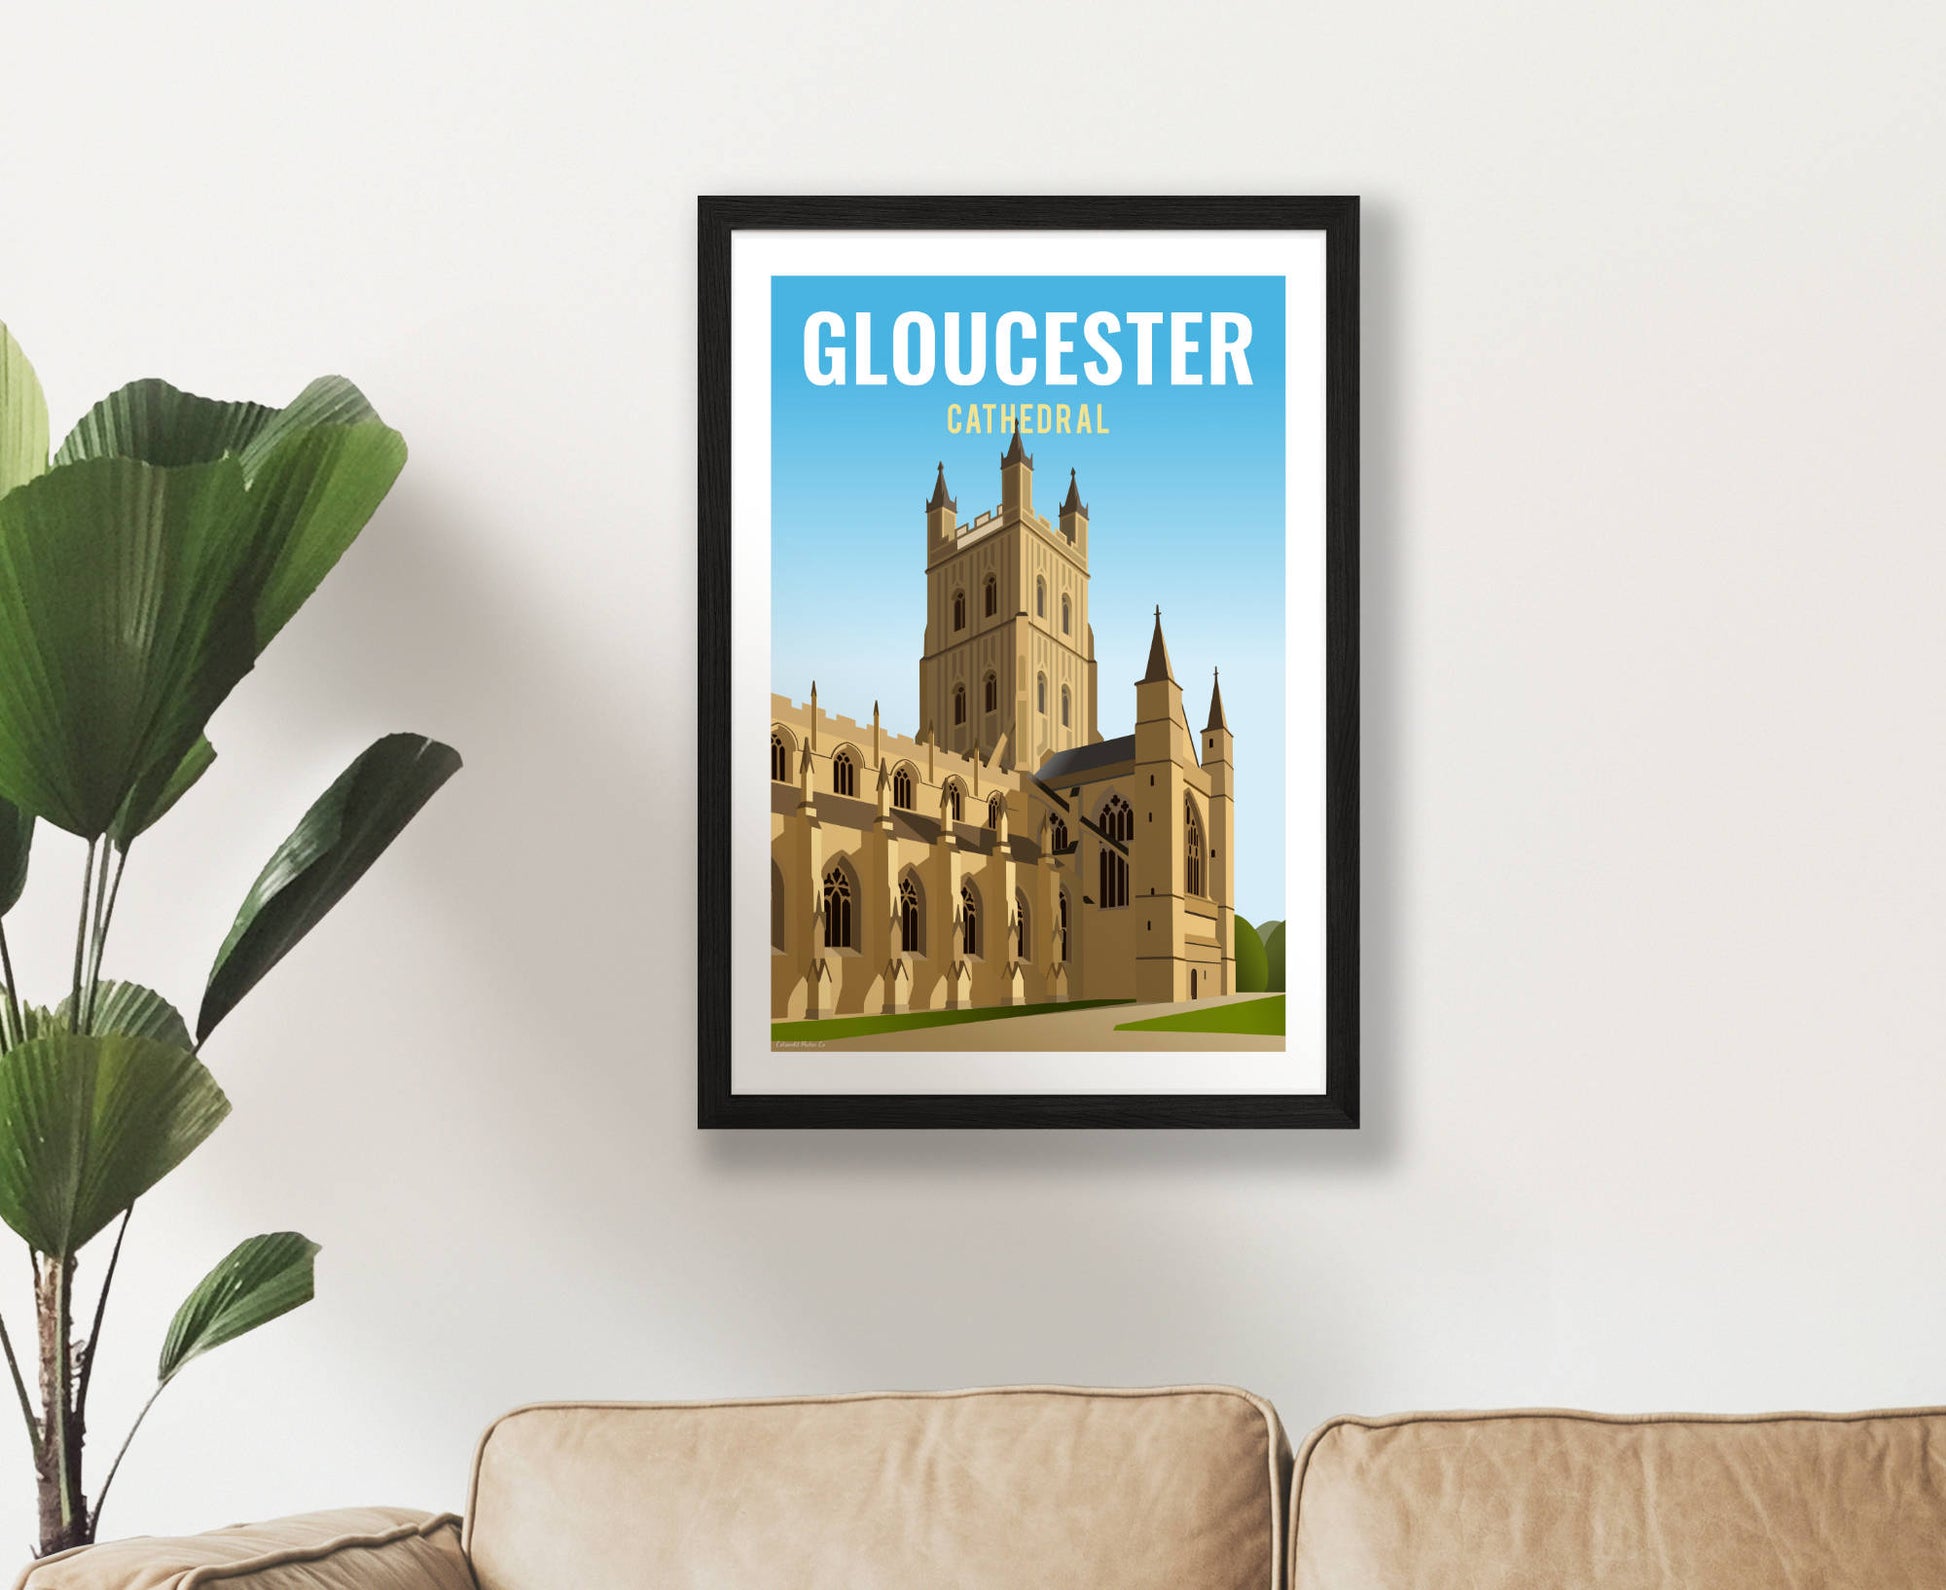 Gloucester Cathedral Poster in black frame